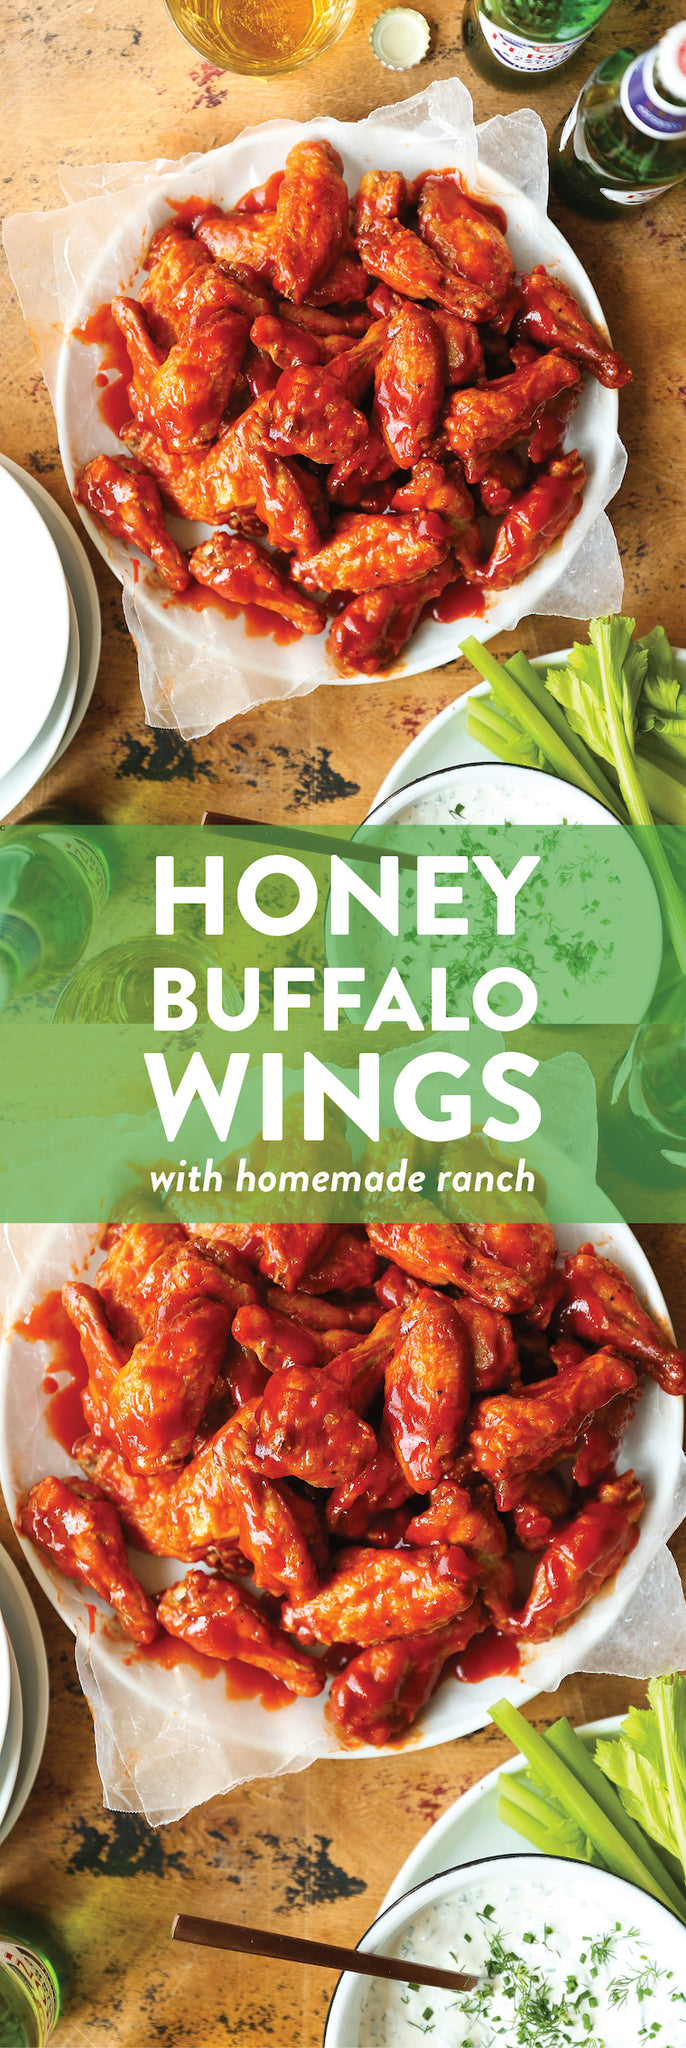 Honey Buffalo Wings with Homemade Ranch